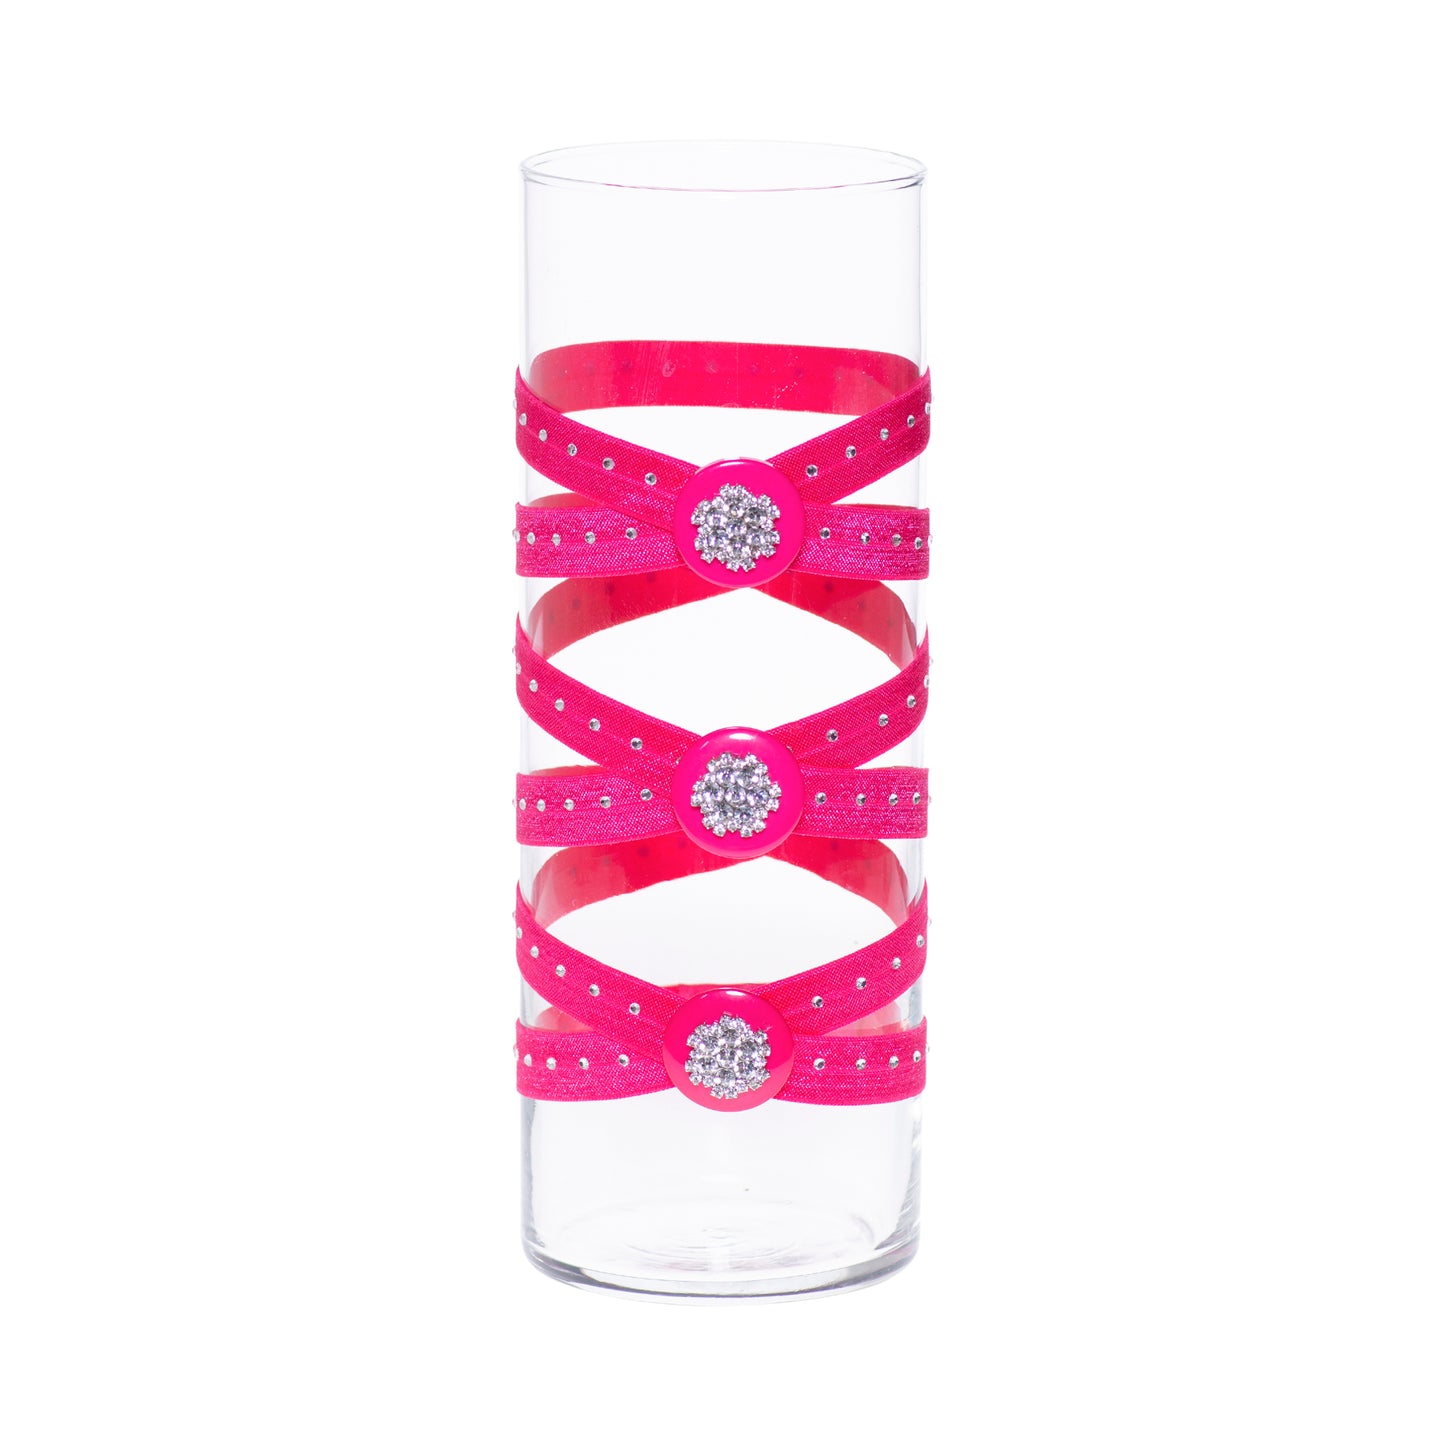 3.5" x 9.5" Vase Hot Pink Rhinestone 5X 5 Silver Rhinestones Valentine Love Collection Complete Set